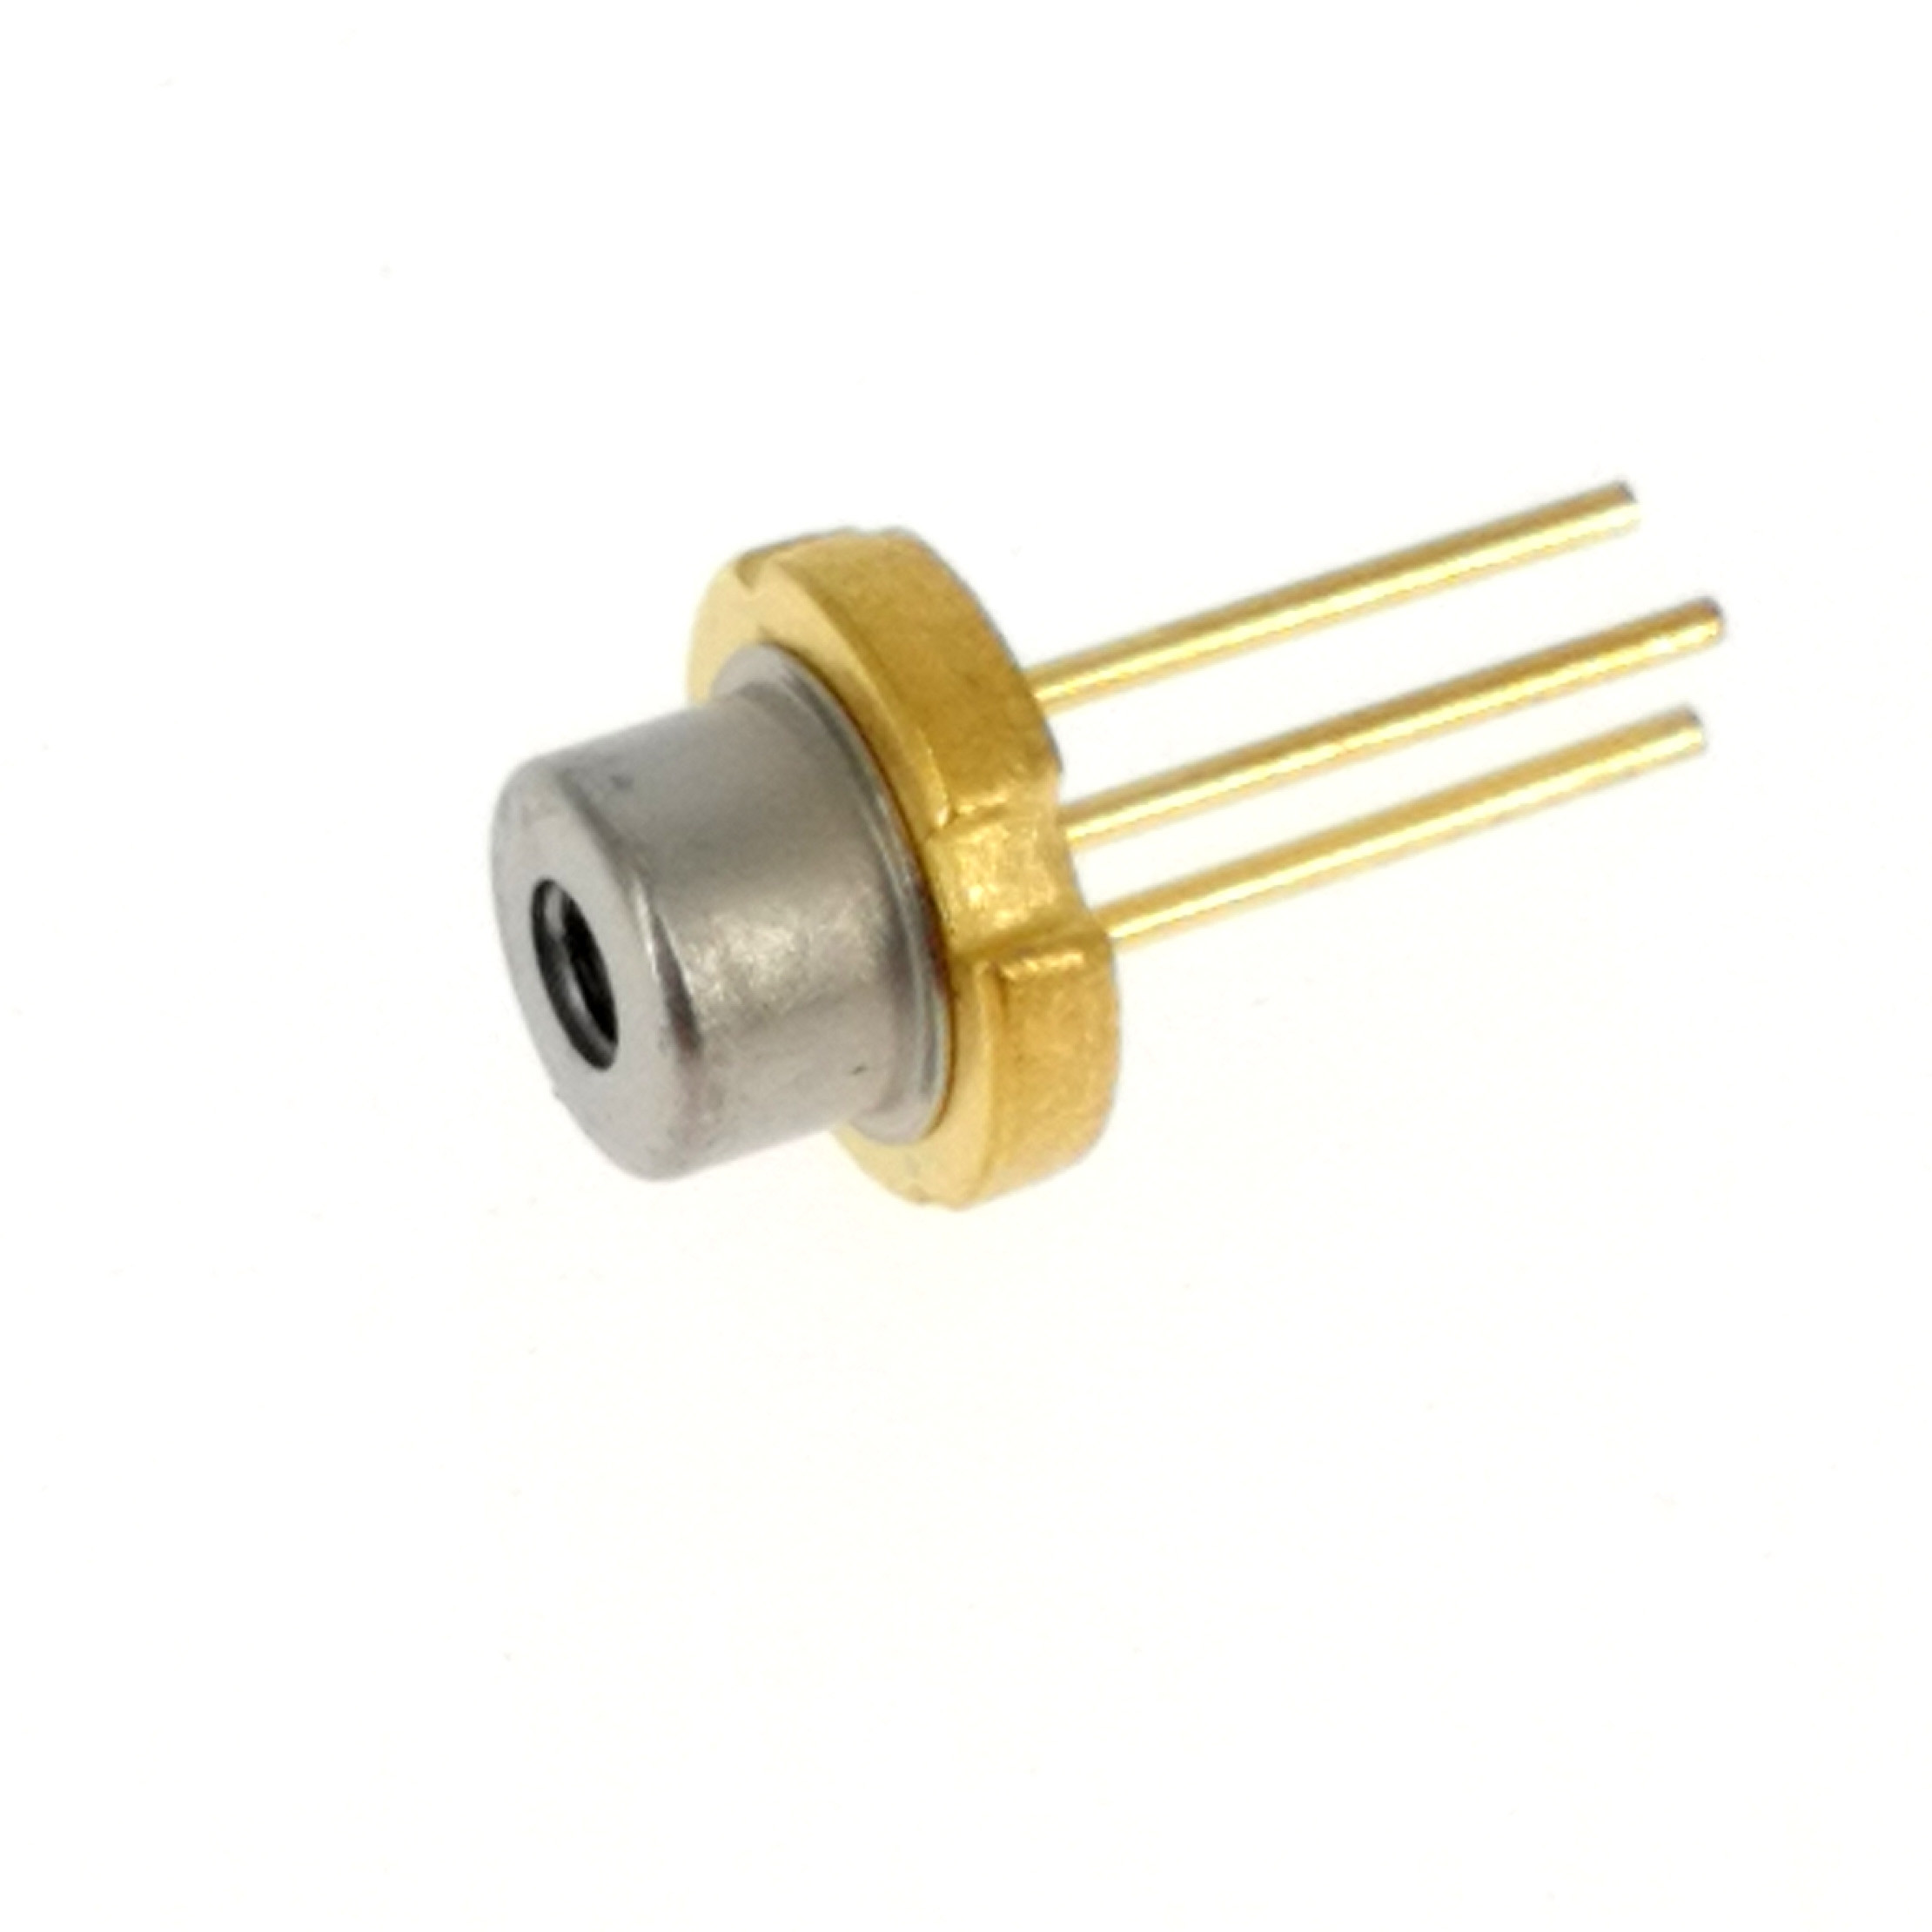 5pcs QSI 650nm 5mw 50 degree 5.6mm TO-18 N-type pin laser diode LD glass